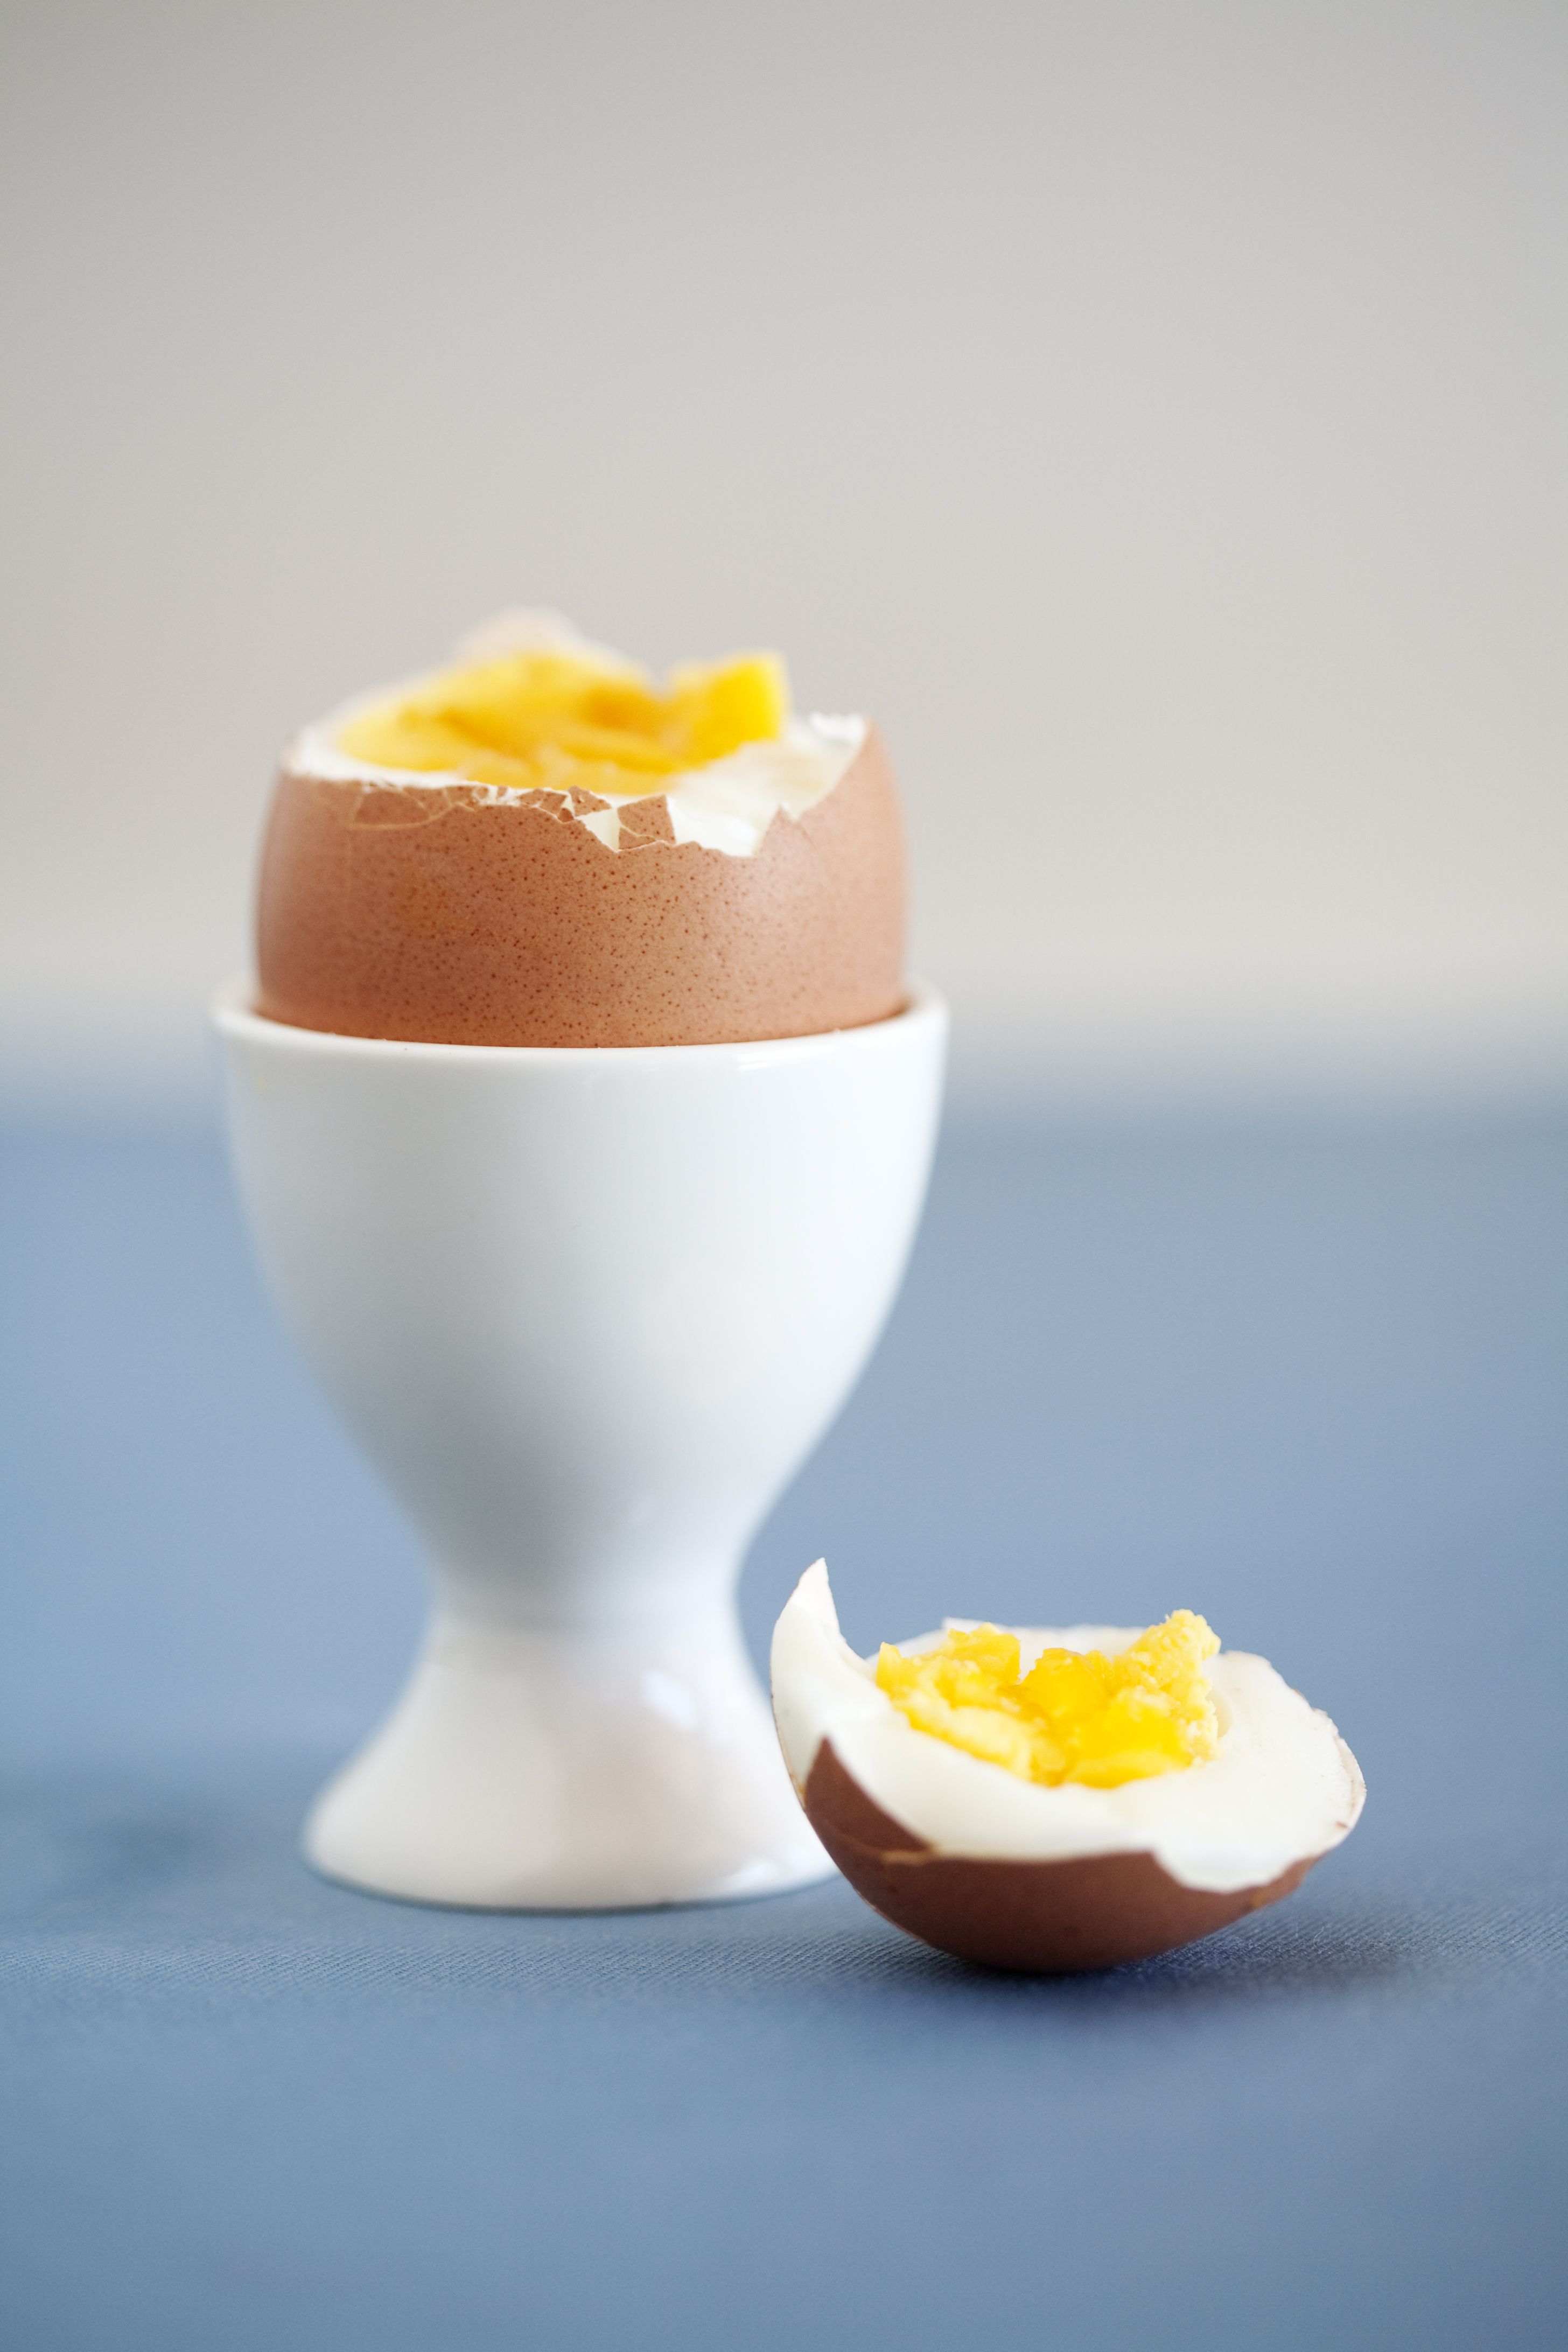 https://hips.hearstapps.com/hmg-prod/images/cracked-hard-boiled-brown-egg-in-a-white-egg-cup-royalty-free-image-1602597435.jpg